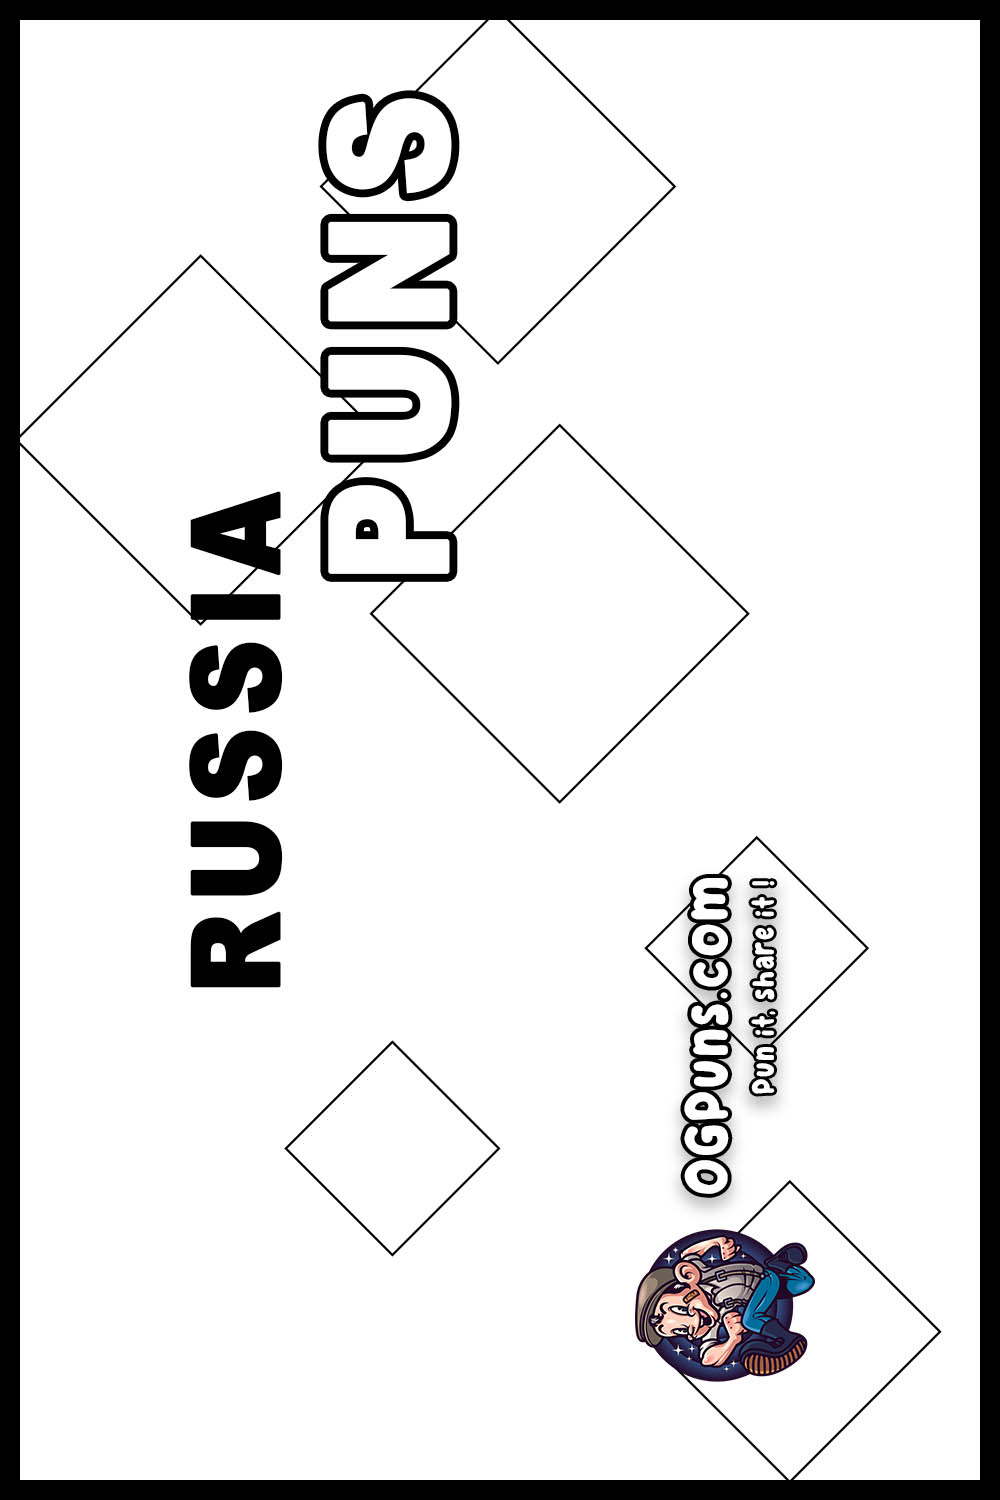 Russia puns Pinterest Image